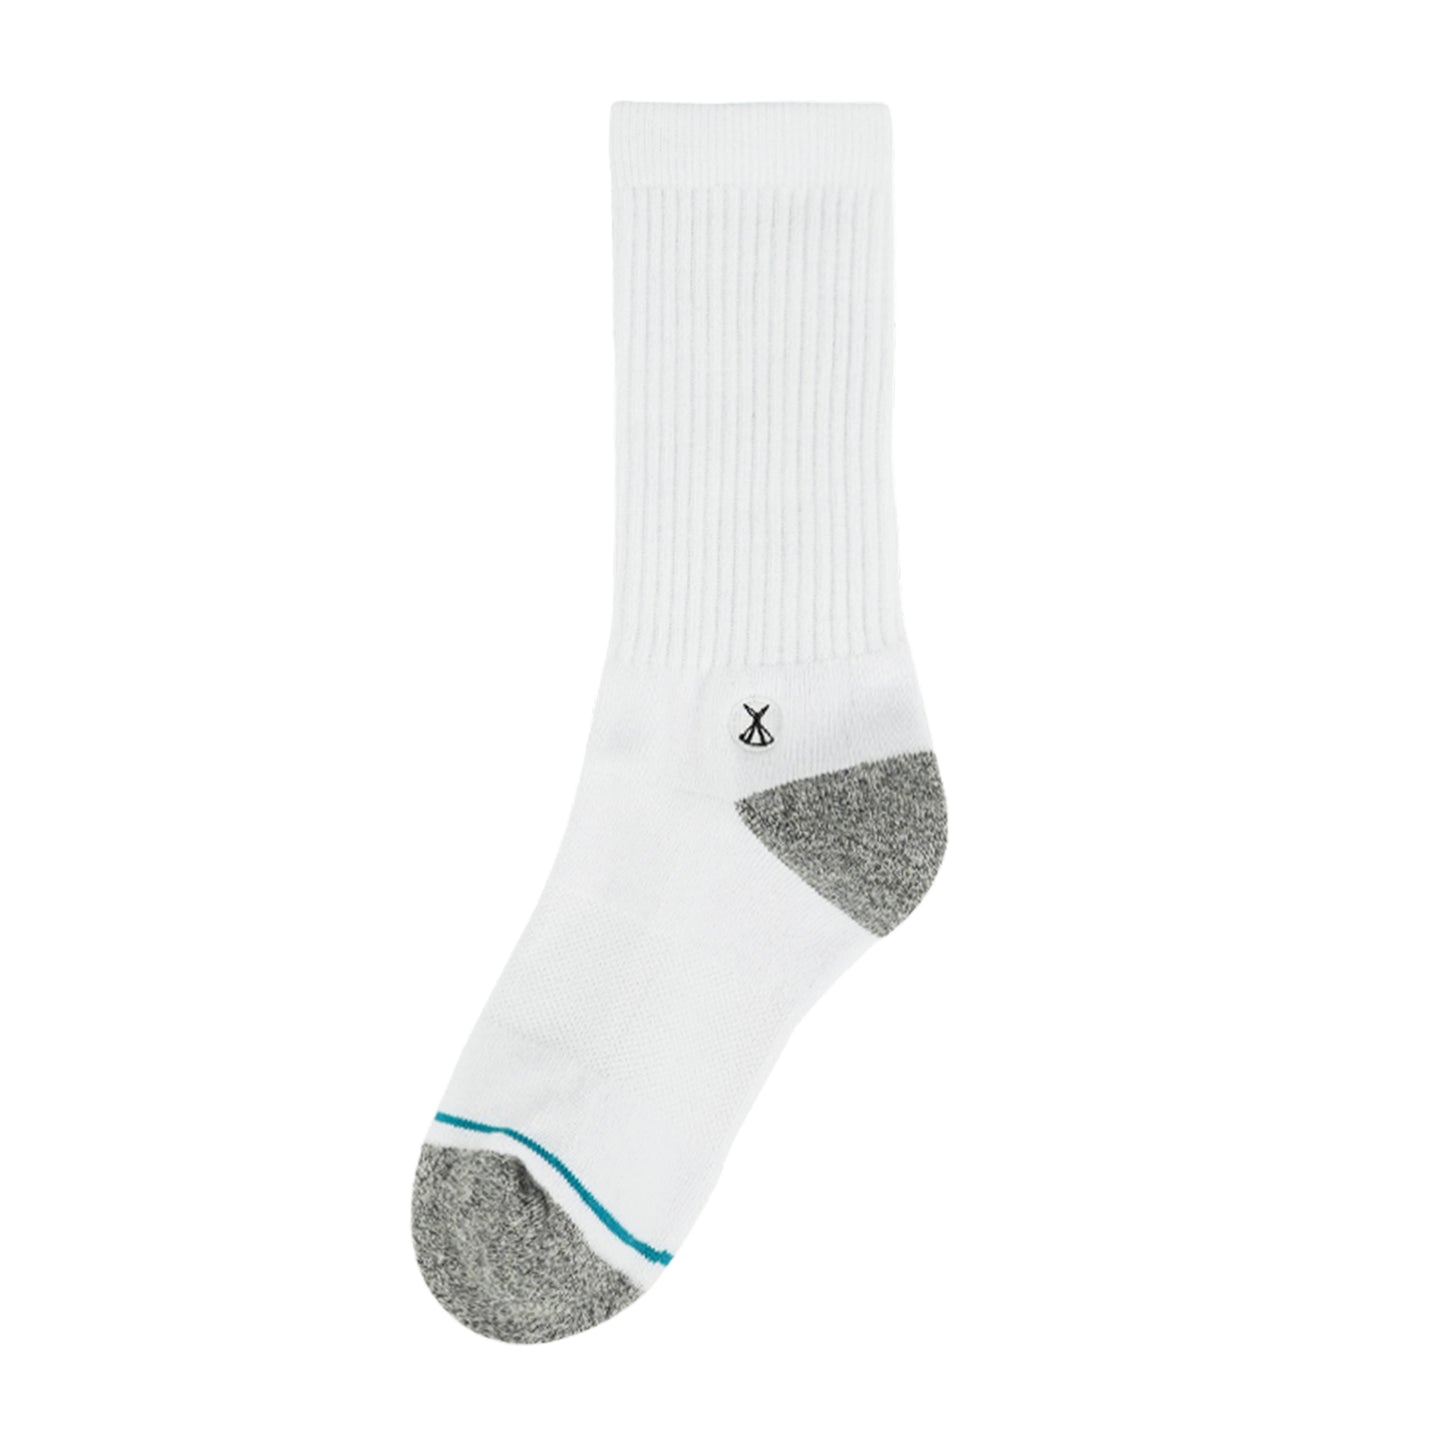 Classic Socks B.EXTRA white